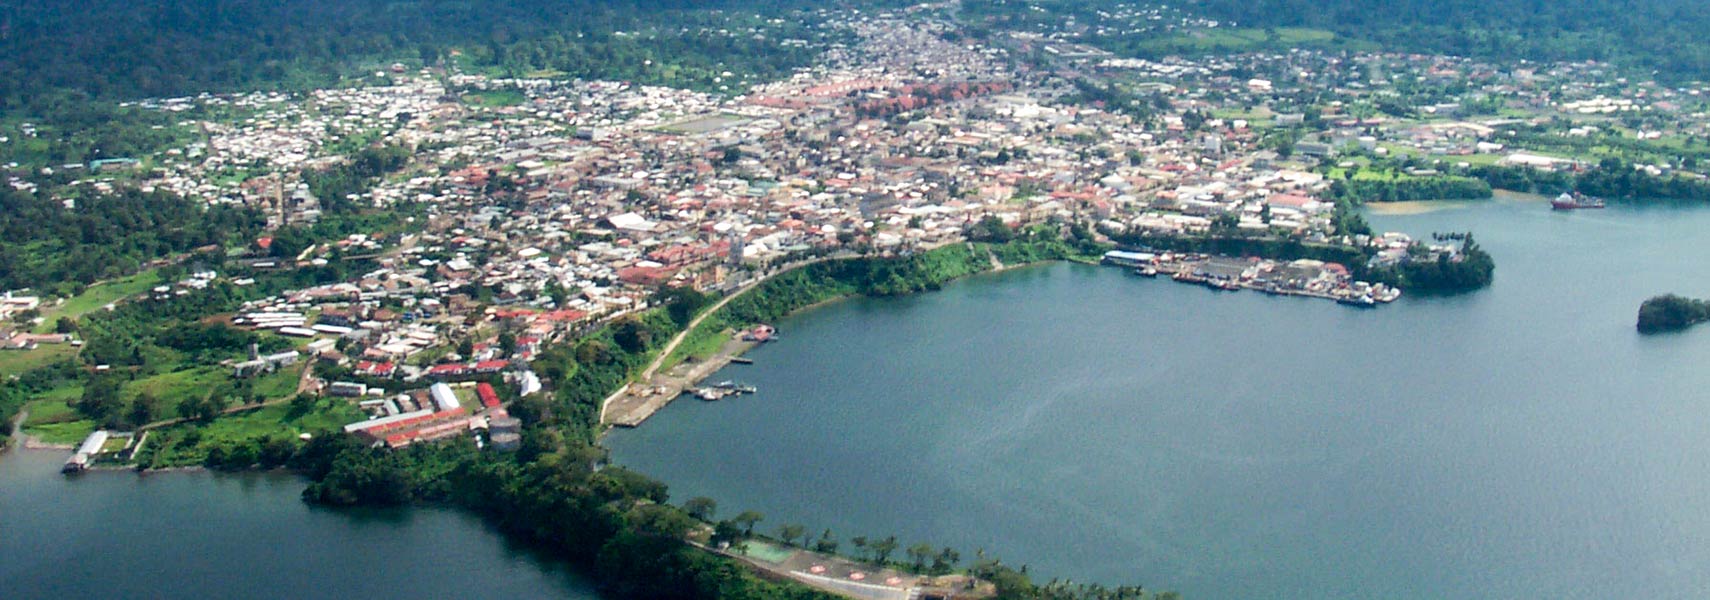 Malabo, capital city of Equatorial Guinea